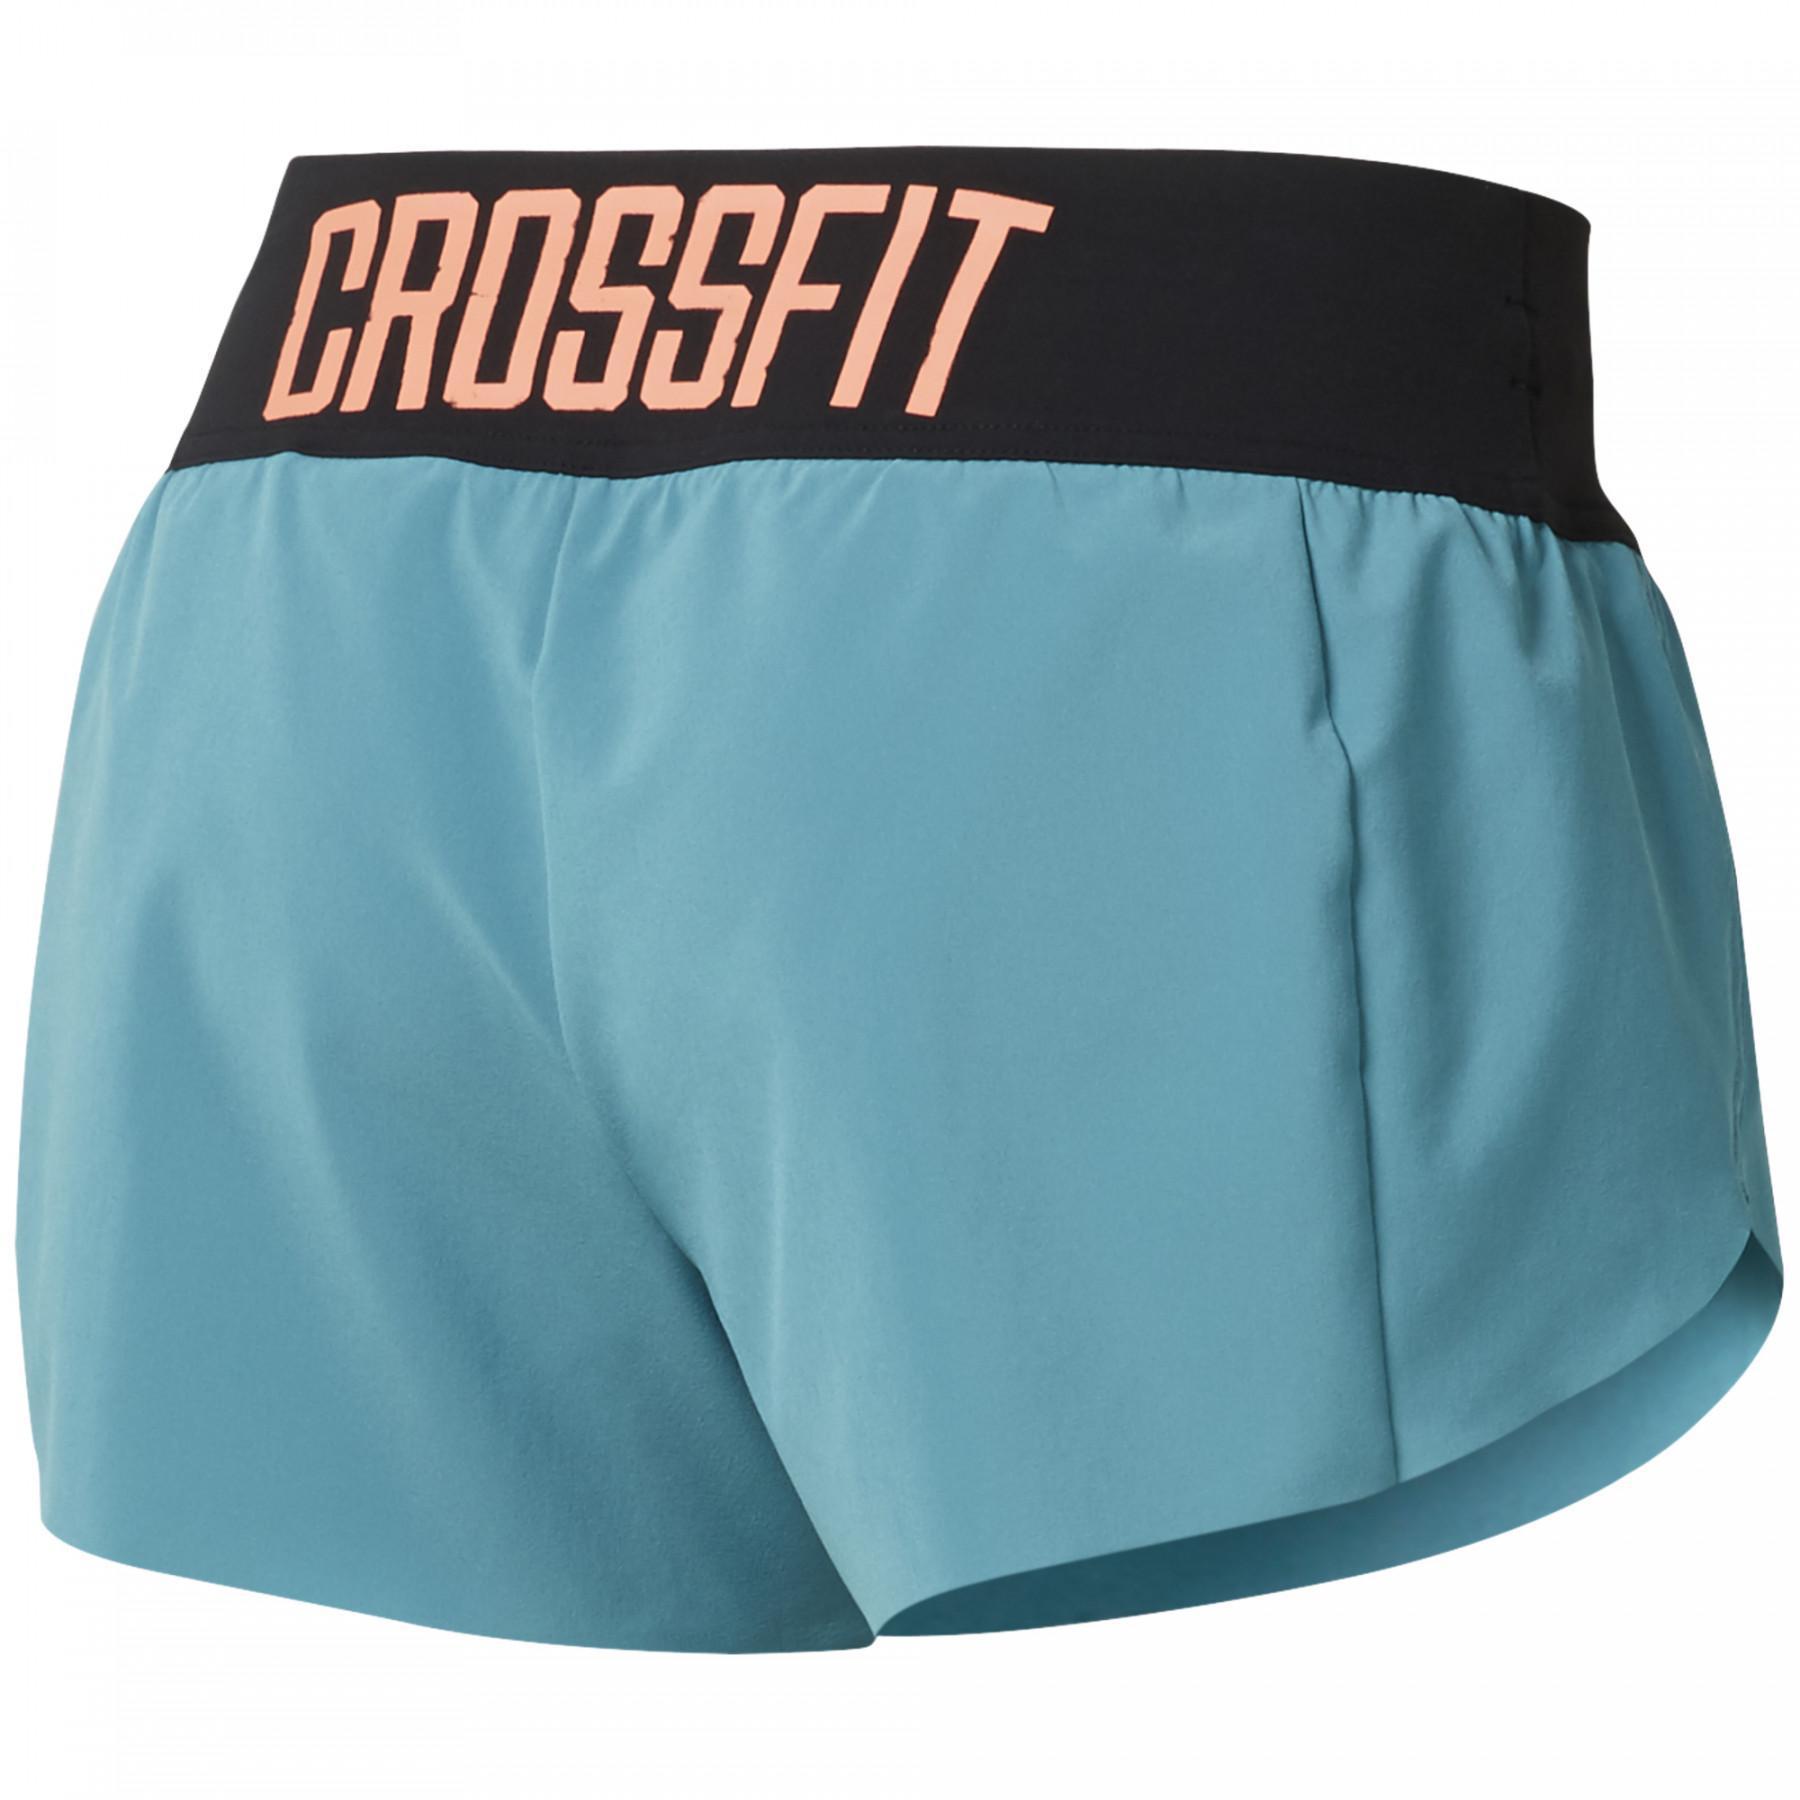 Women's shorts with mesh waist Reebok CrossFit®